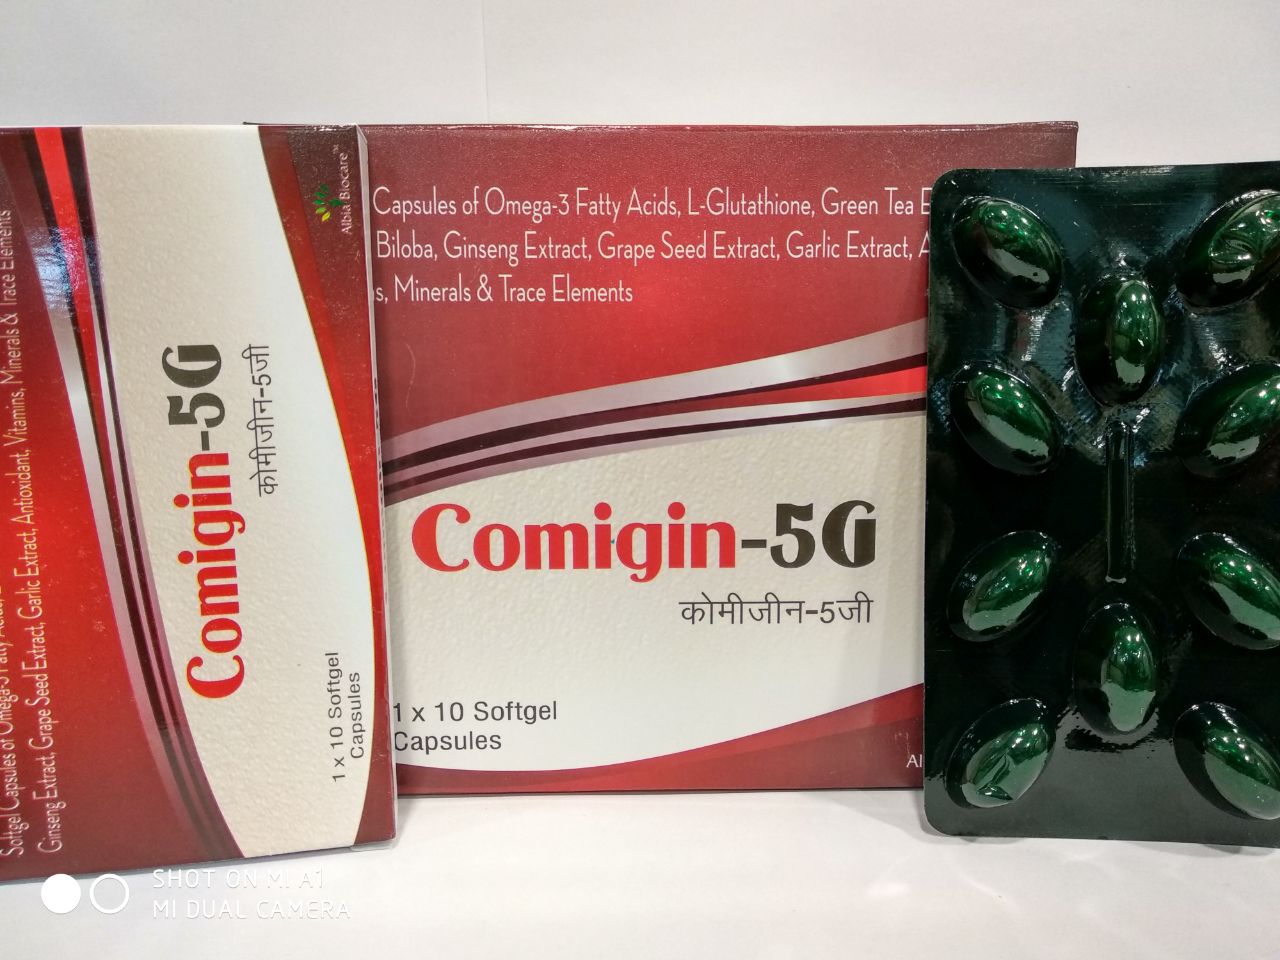 COMIGIN-5G SOFTGEL | Ginseng + Gingko Biloba + Grape Seed Extract + Green Tea Extract + Garlic Extract + L-Glutathione + Omega-3 Fatty Acids + Amino Acids + Vitamins + Minerals 